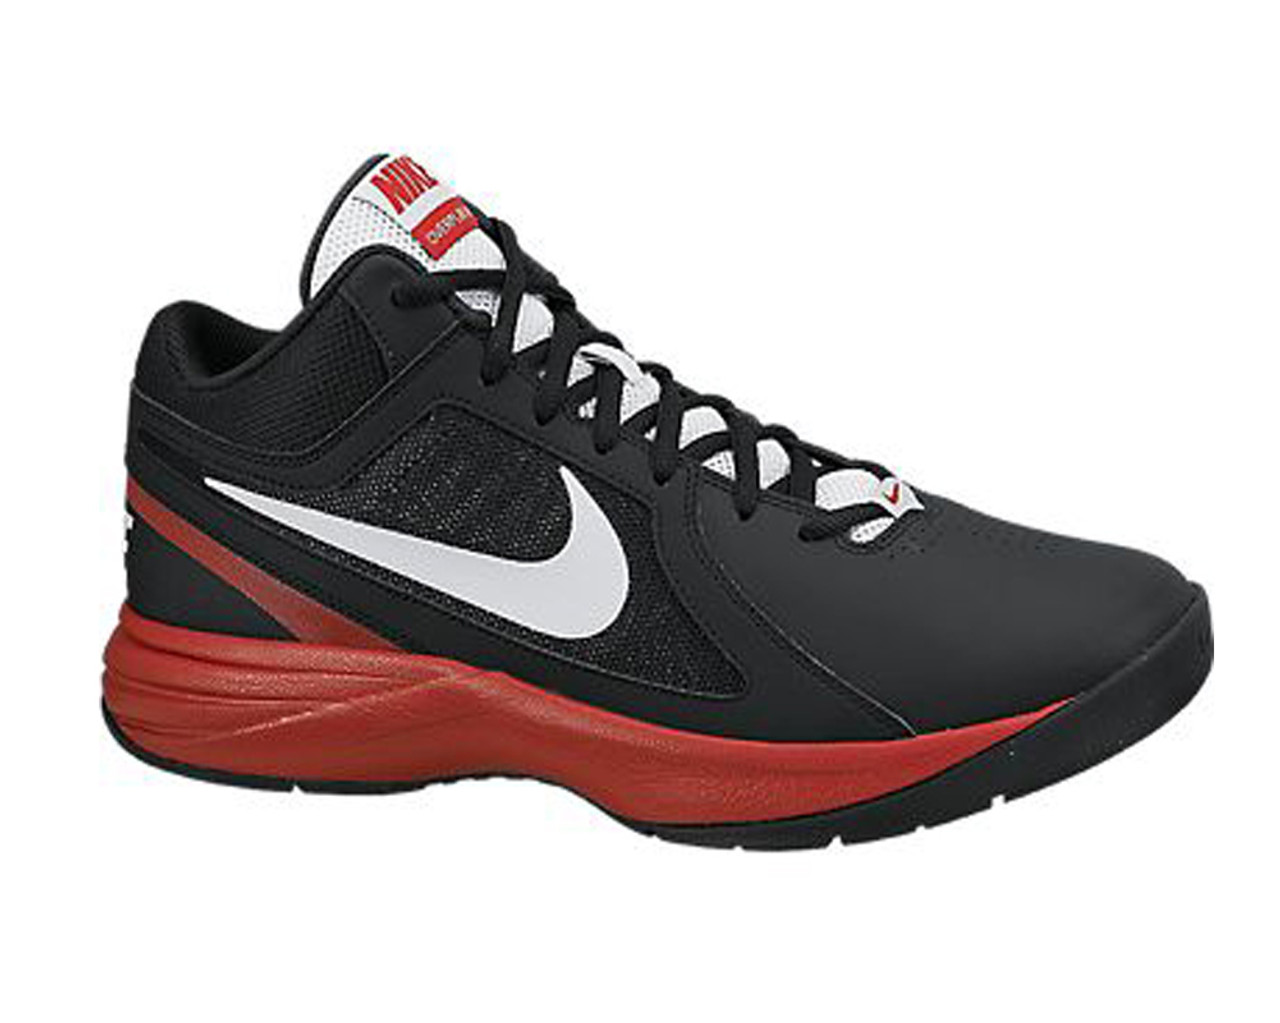 Nike Men's VIII Basketball Shoes - Black | Discount Nike Men's Athletic & - Shoolu.com | Shoolu.com